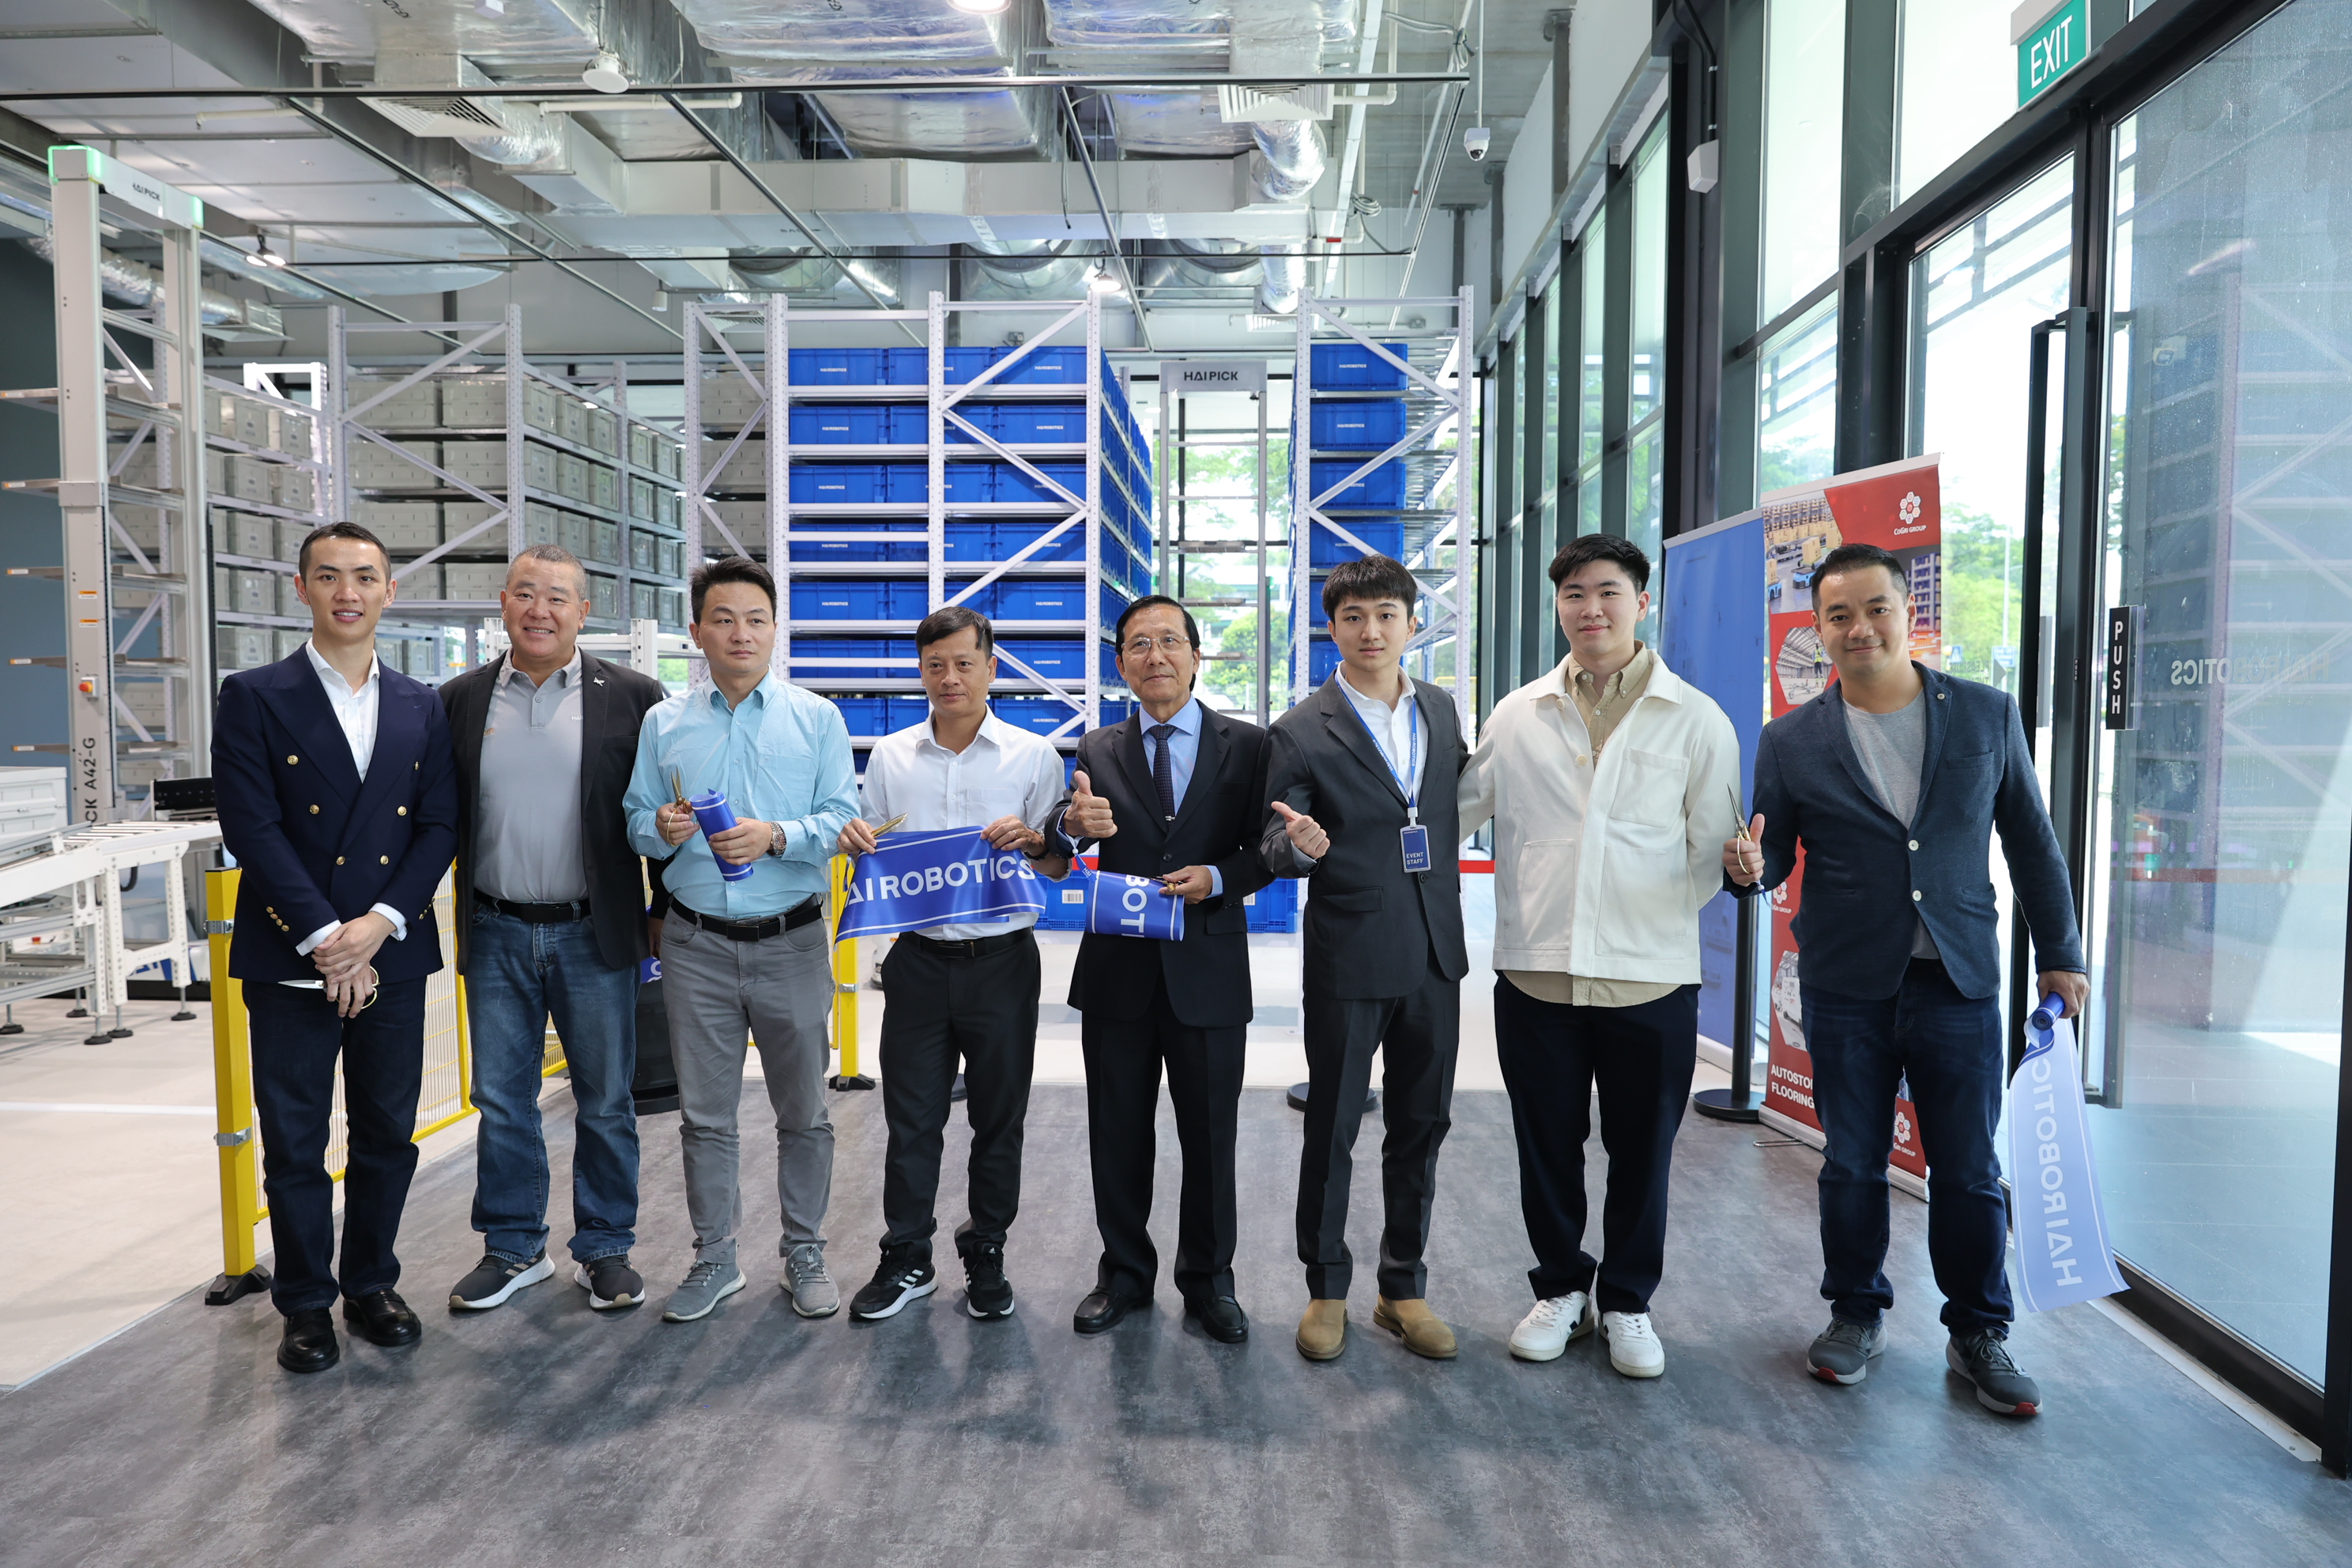 From the left [Nathan Zeng, President, Hai Robotics SEA & ANZ), Michael Chung (Managing Director, Acetec Technology Co., Ltd), Wang Shenghong (General Manager, BOK INTERNATIONAL (HONG KONG) CO.,LIMITED), VO TIEN LAM (CEO,THUAN THIEN PHAT P.E.I CO., LTD.), DINH TRUNG HIEN (Representative, ASICO HANDELS GmbH), Lukas Lai (Regional Sales Director, Hai Robotics SEA) Chung Dao (Managing Director, XTS TECHNOLOGIES SDN BHD), Xteven Teoh( Managing Director,XTS TECHNOLOGIES SDN BHD)